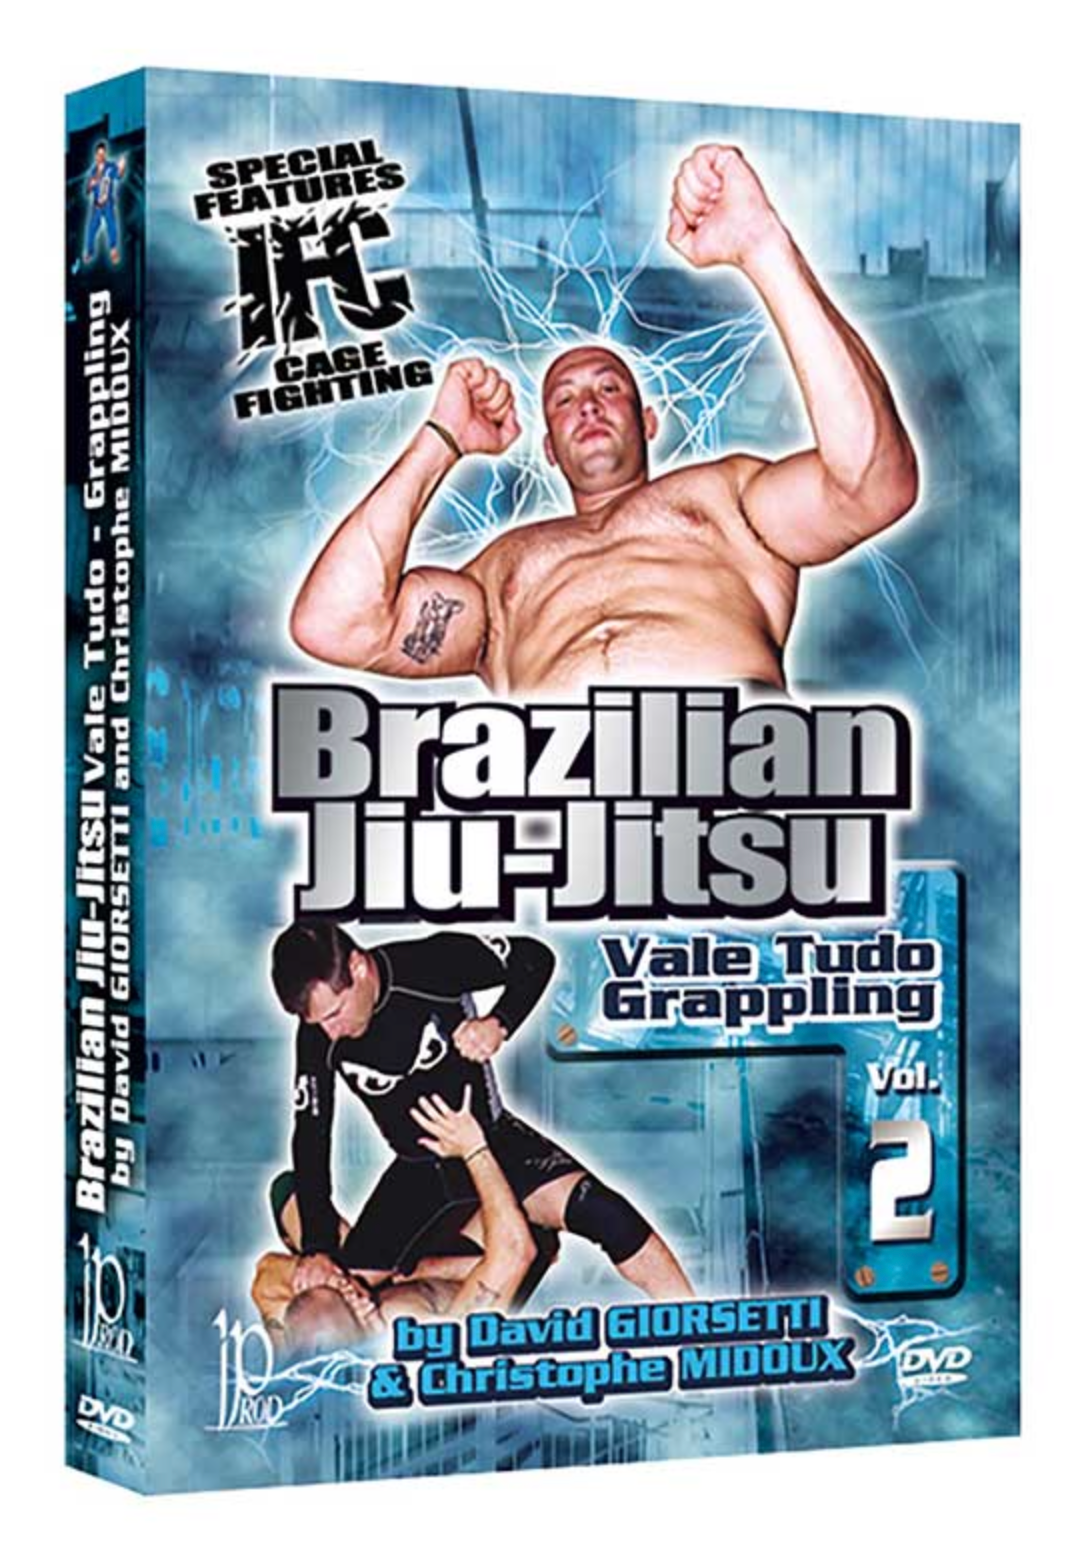 Brazilian Jiu-Jitsu Vale Tudo Grappling DVD 2 by David Giorsetti & Christophe Midoux